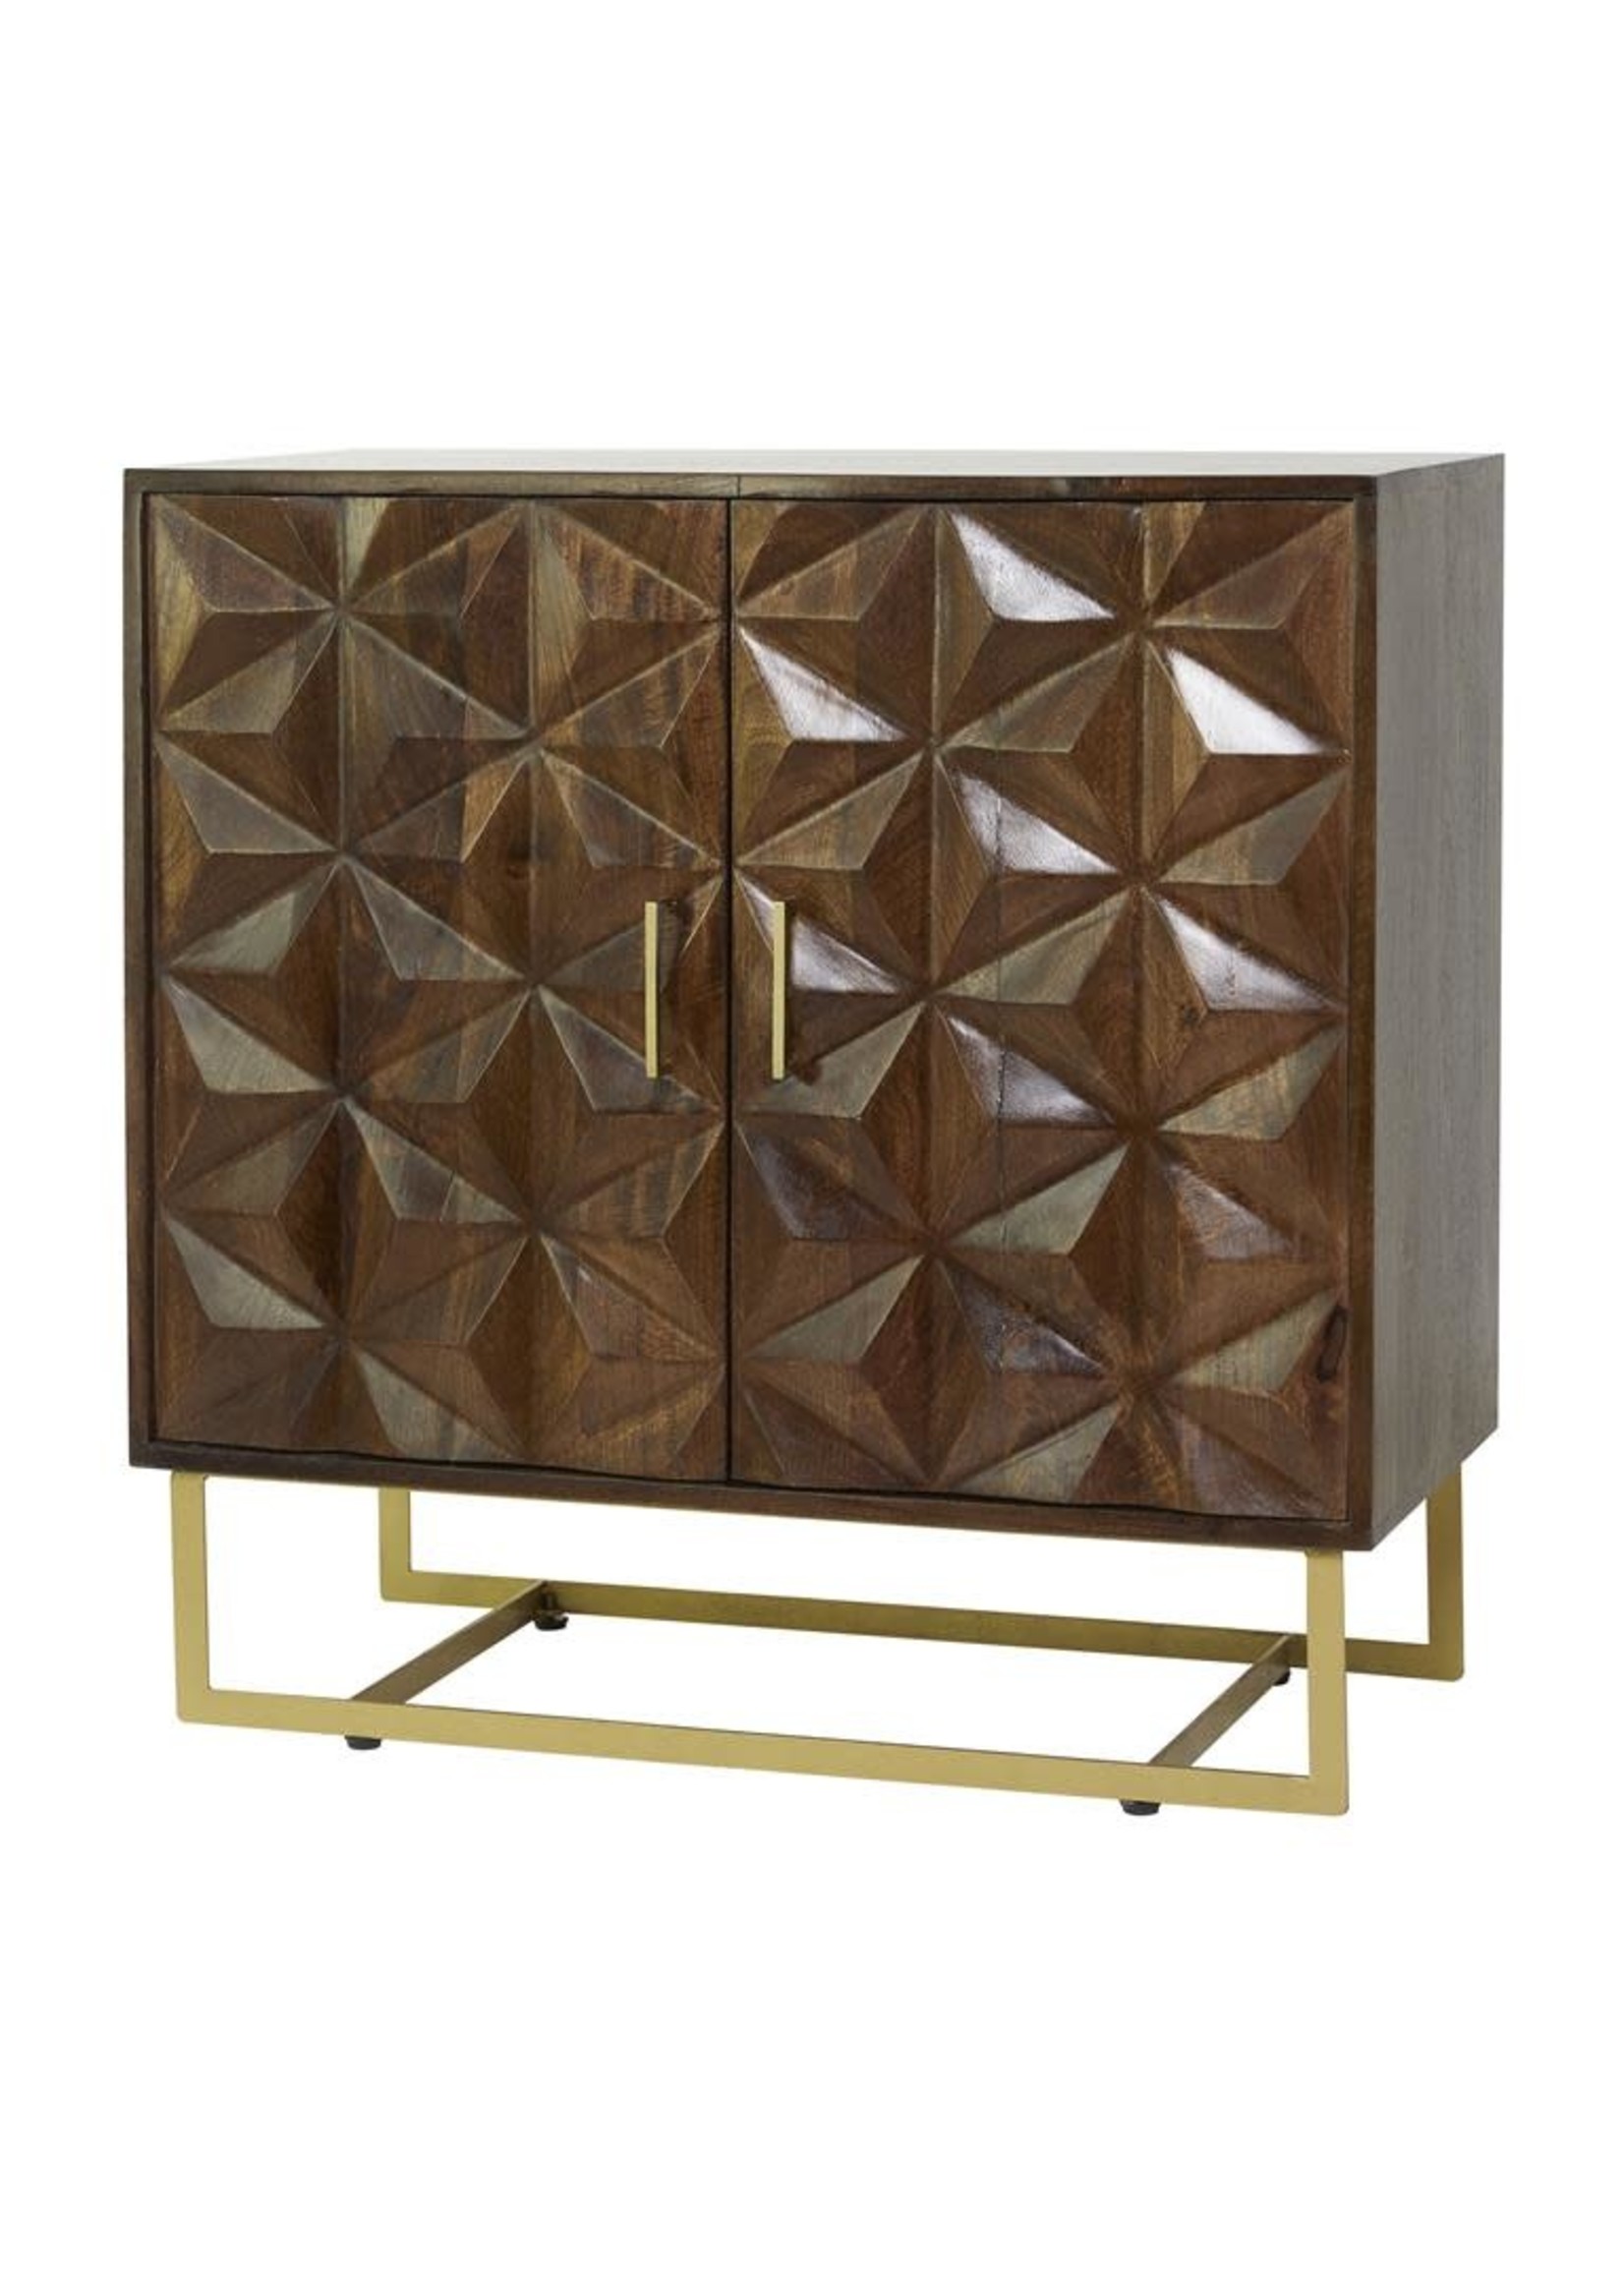 UMA Enterprises 80616 Brown Wood Contemporary Cabinet, 34x 34x 16